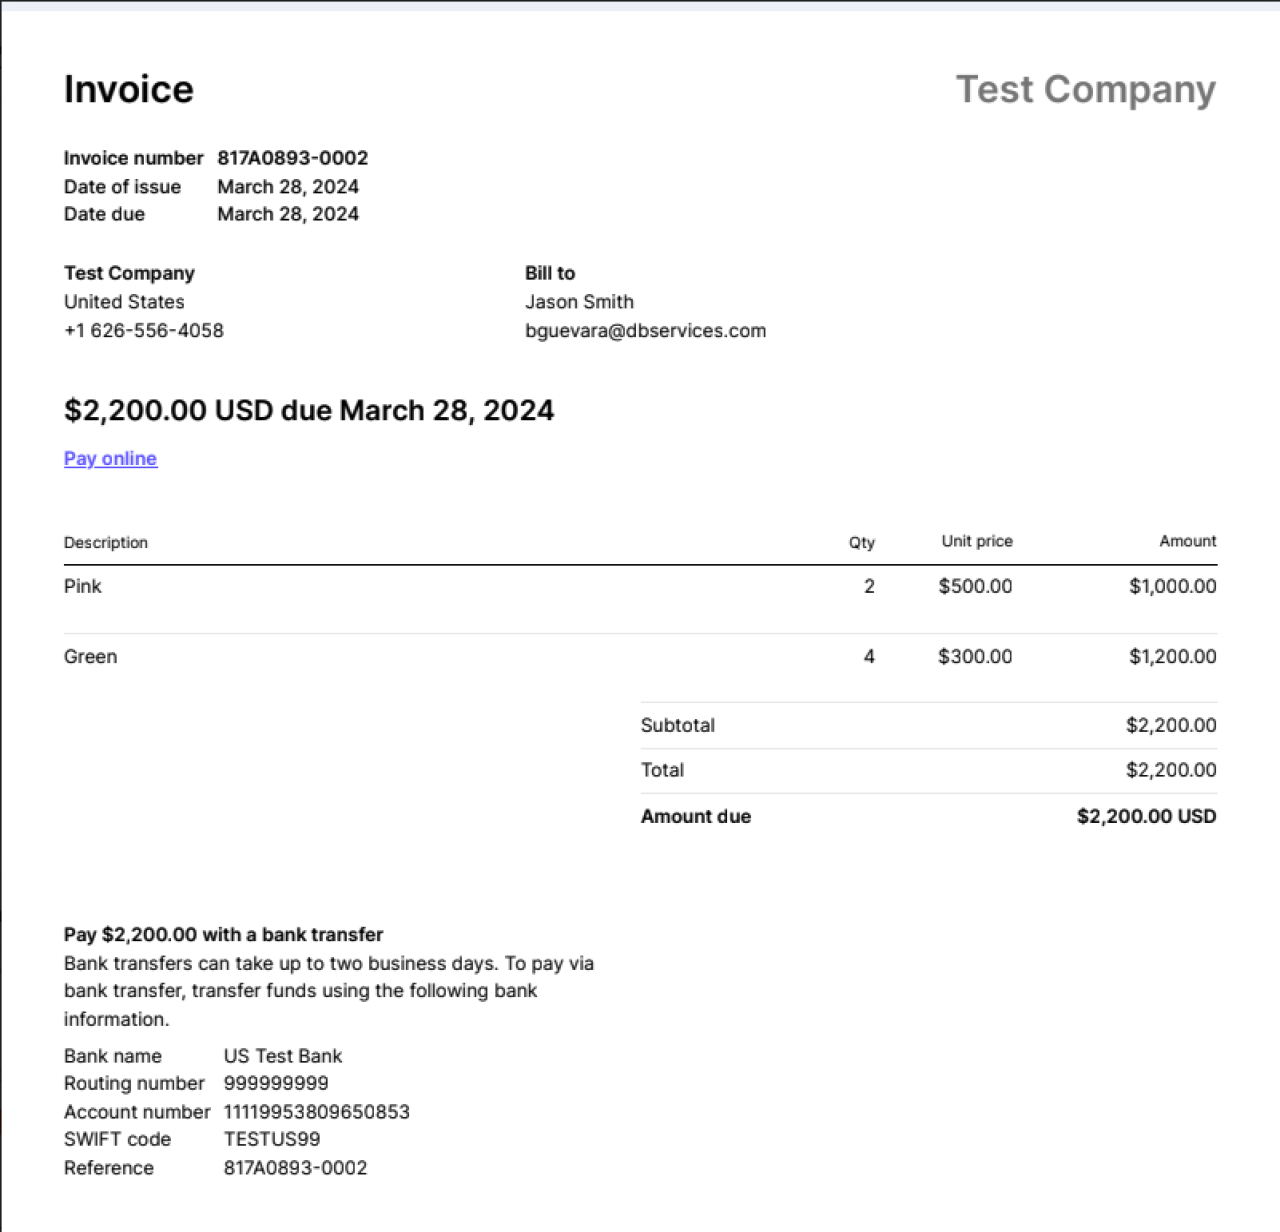 filemaker stripe invoices integration invoice pdf.